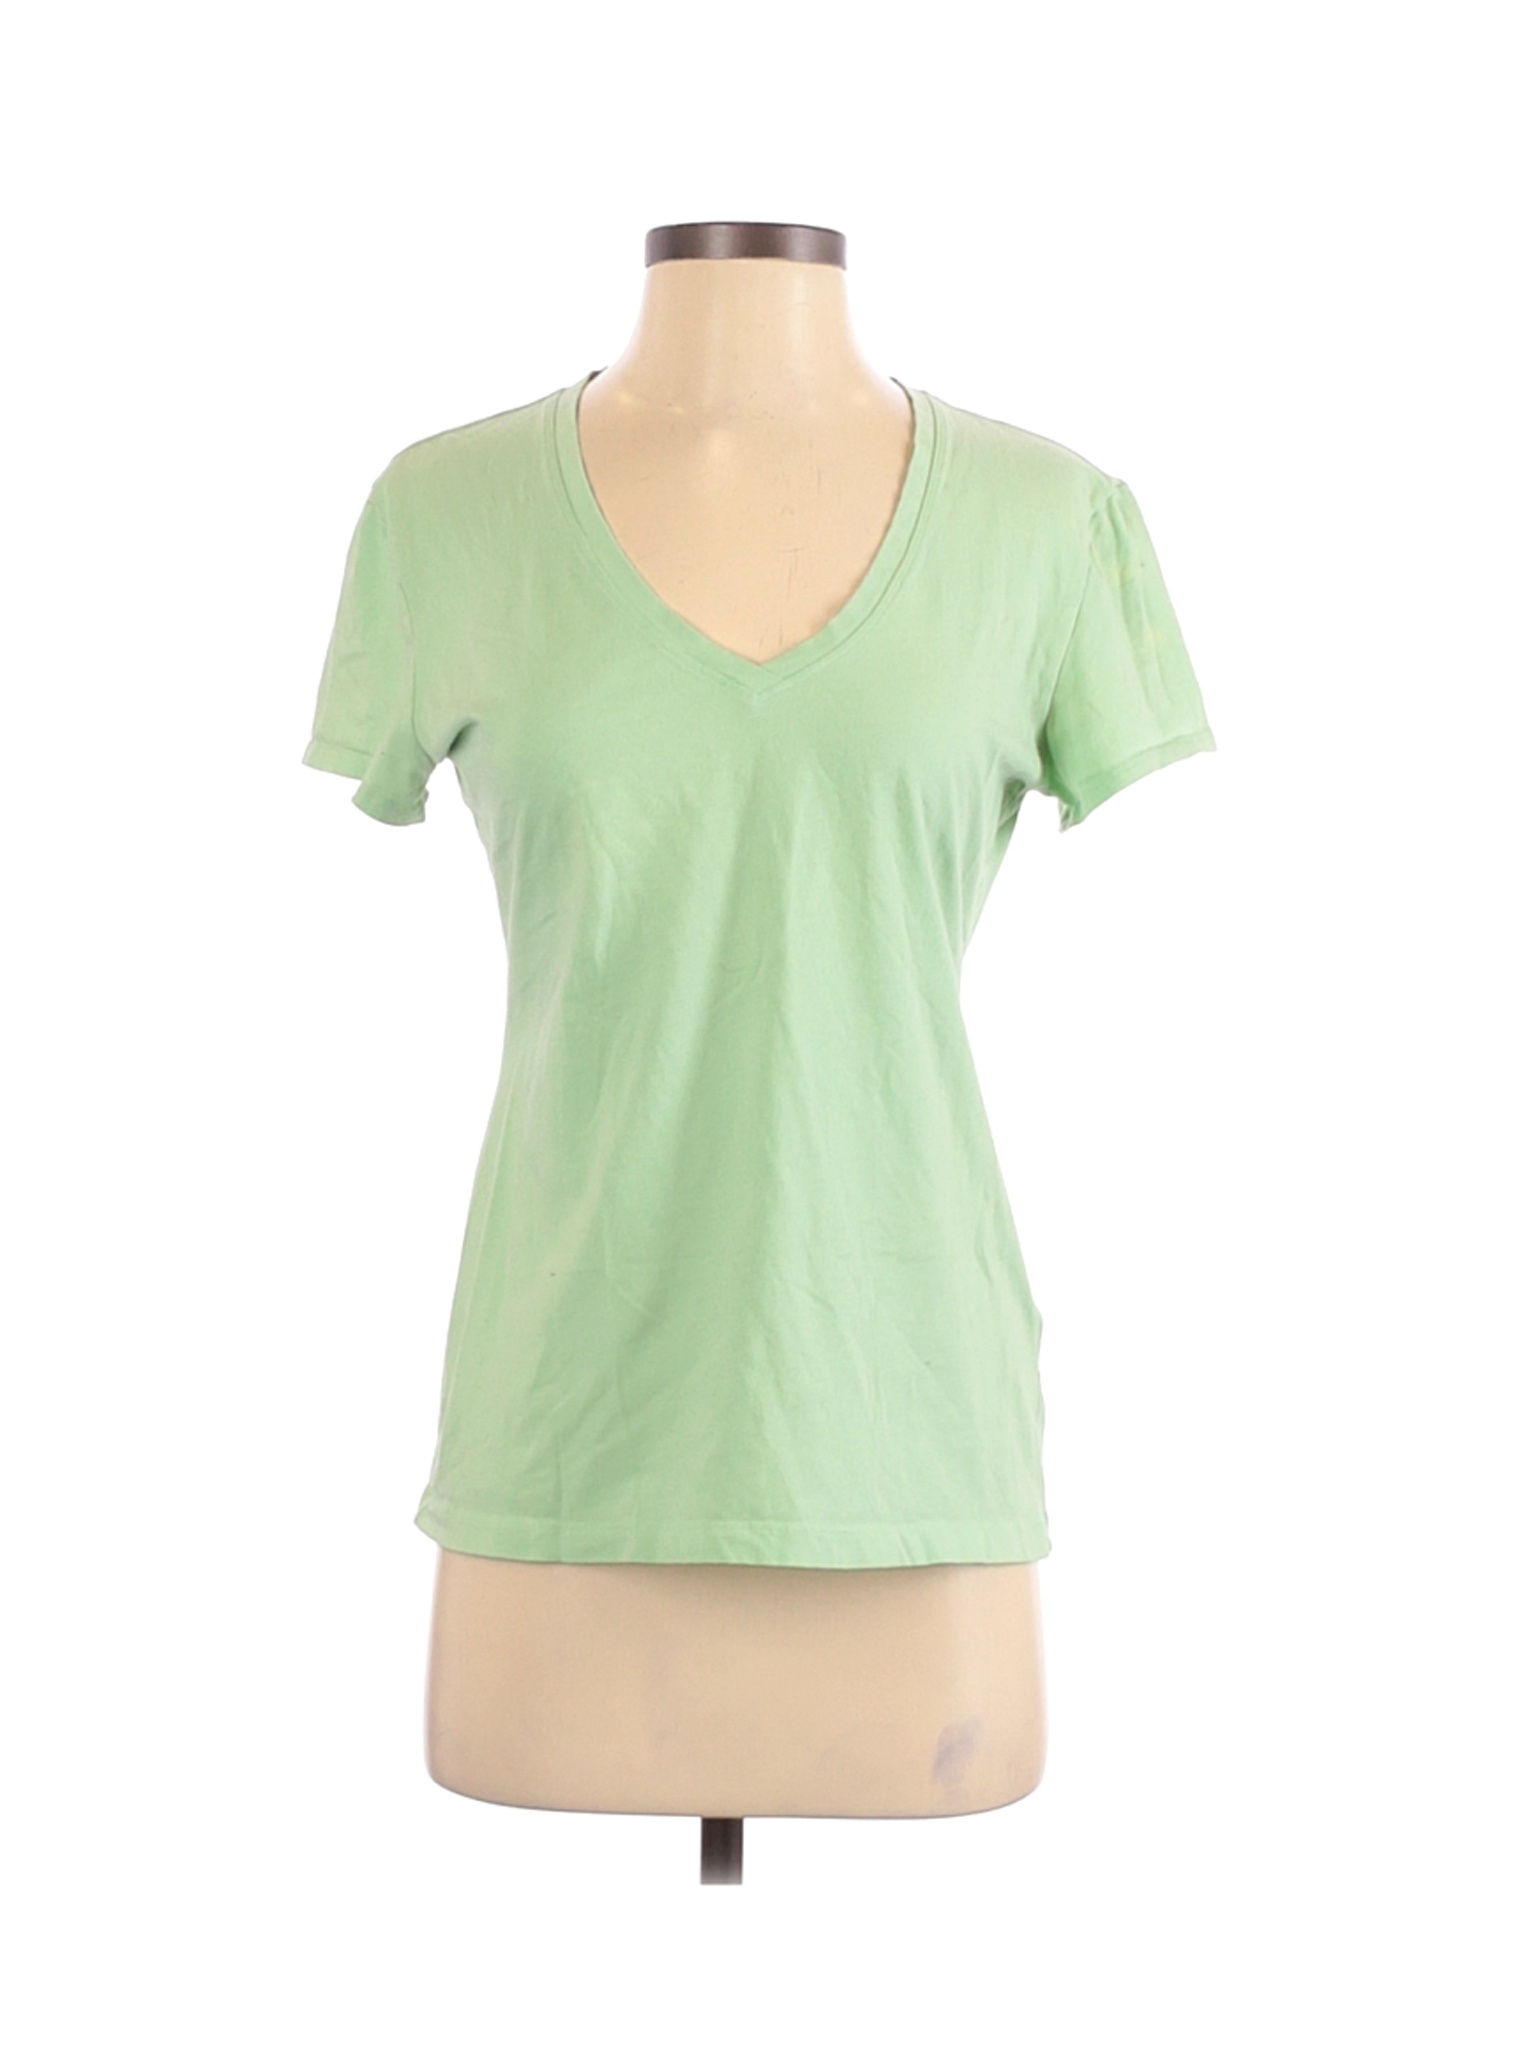 Banana Republic Factory Store Women Green Short Sleeve T-Shirt S | eBay